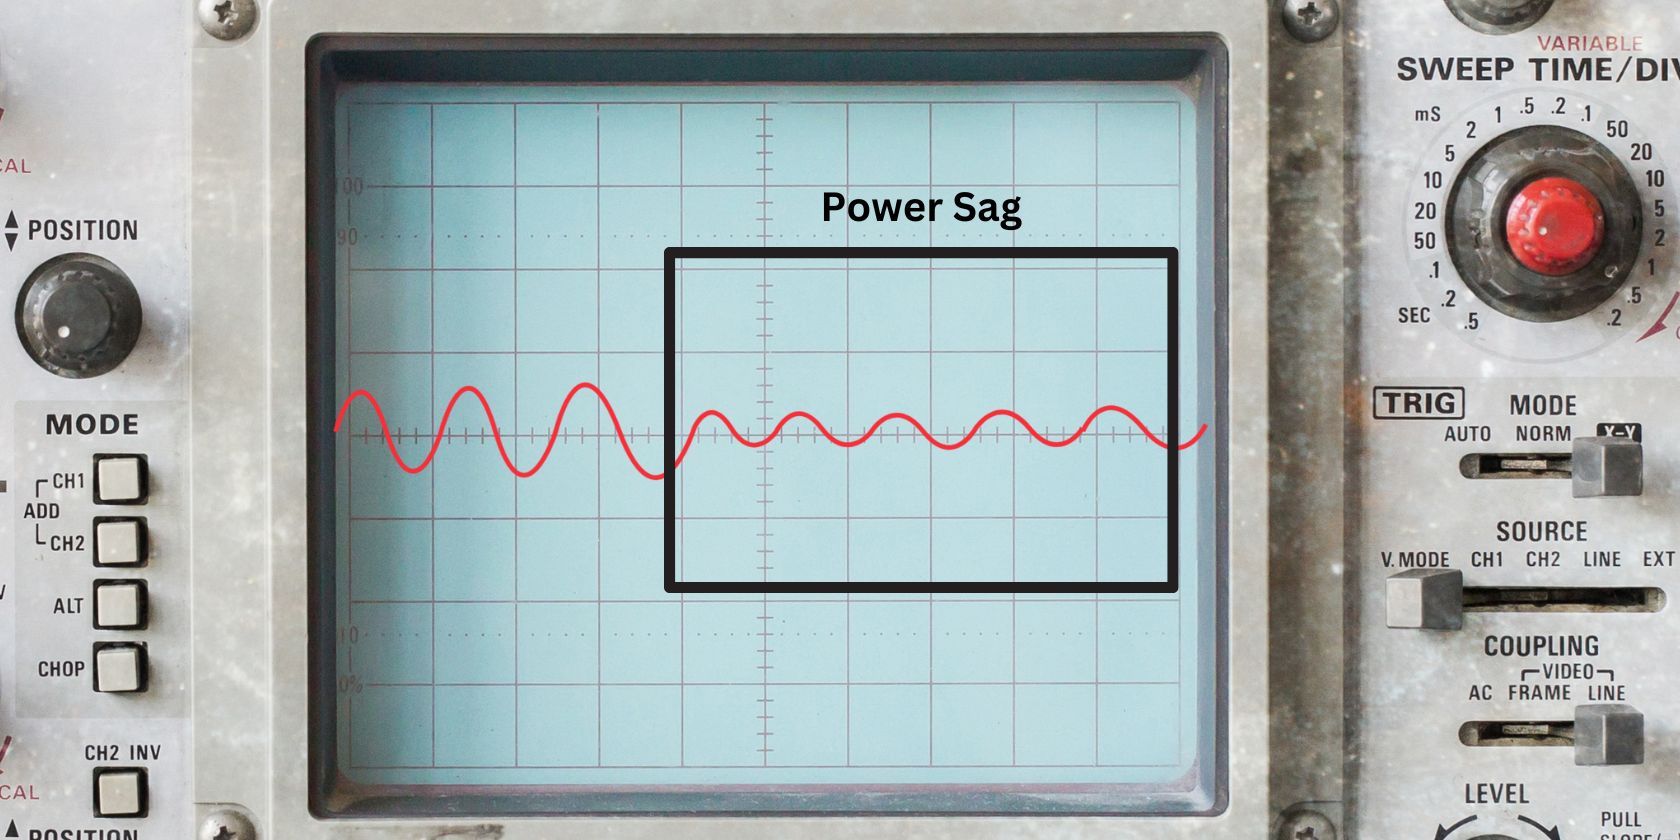 Power sag signal